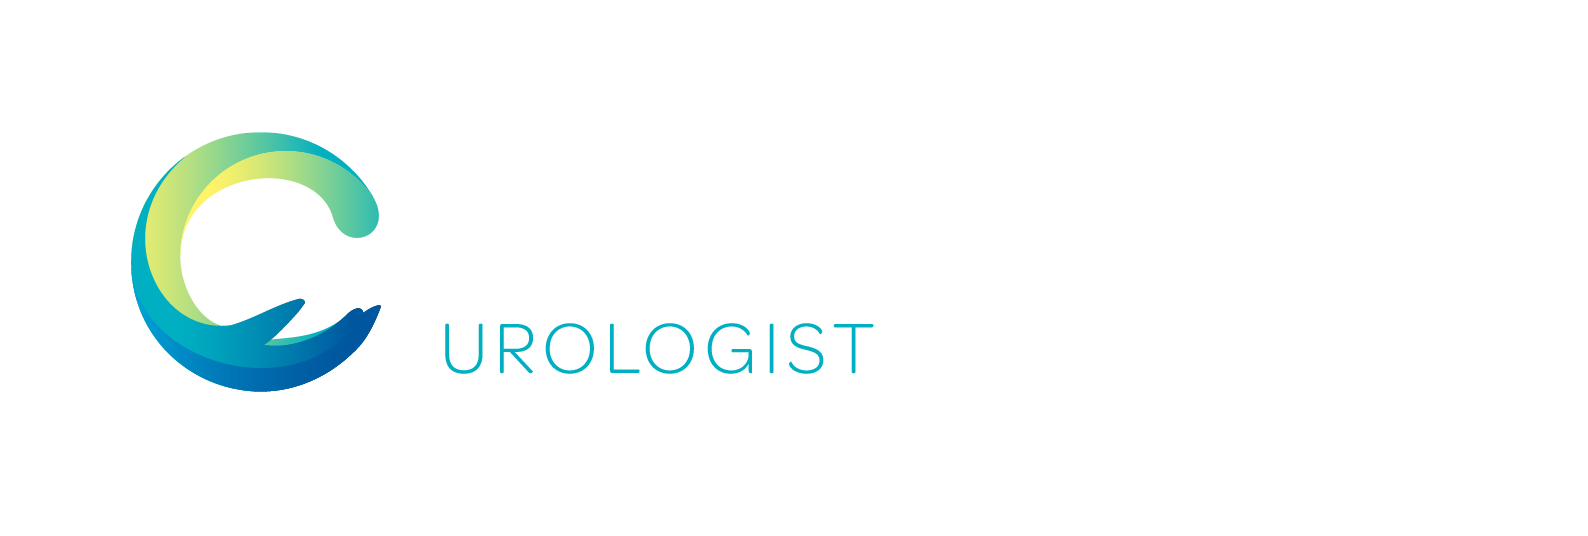 Associate Professor Caroline Dowling MBBS MS FRACS (Urol)